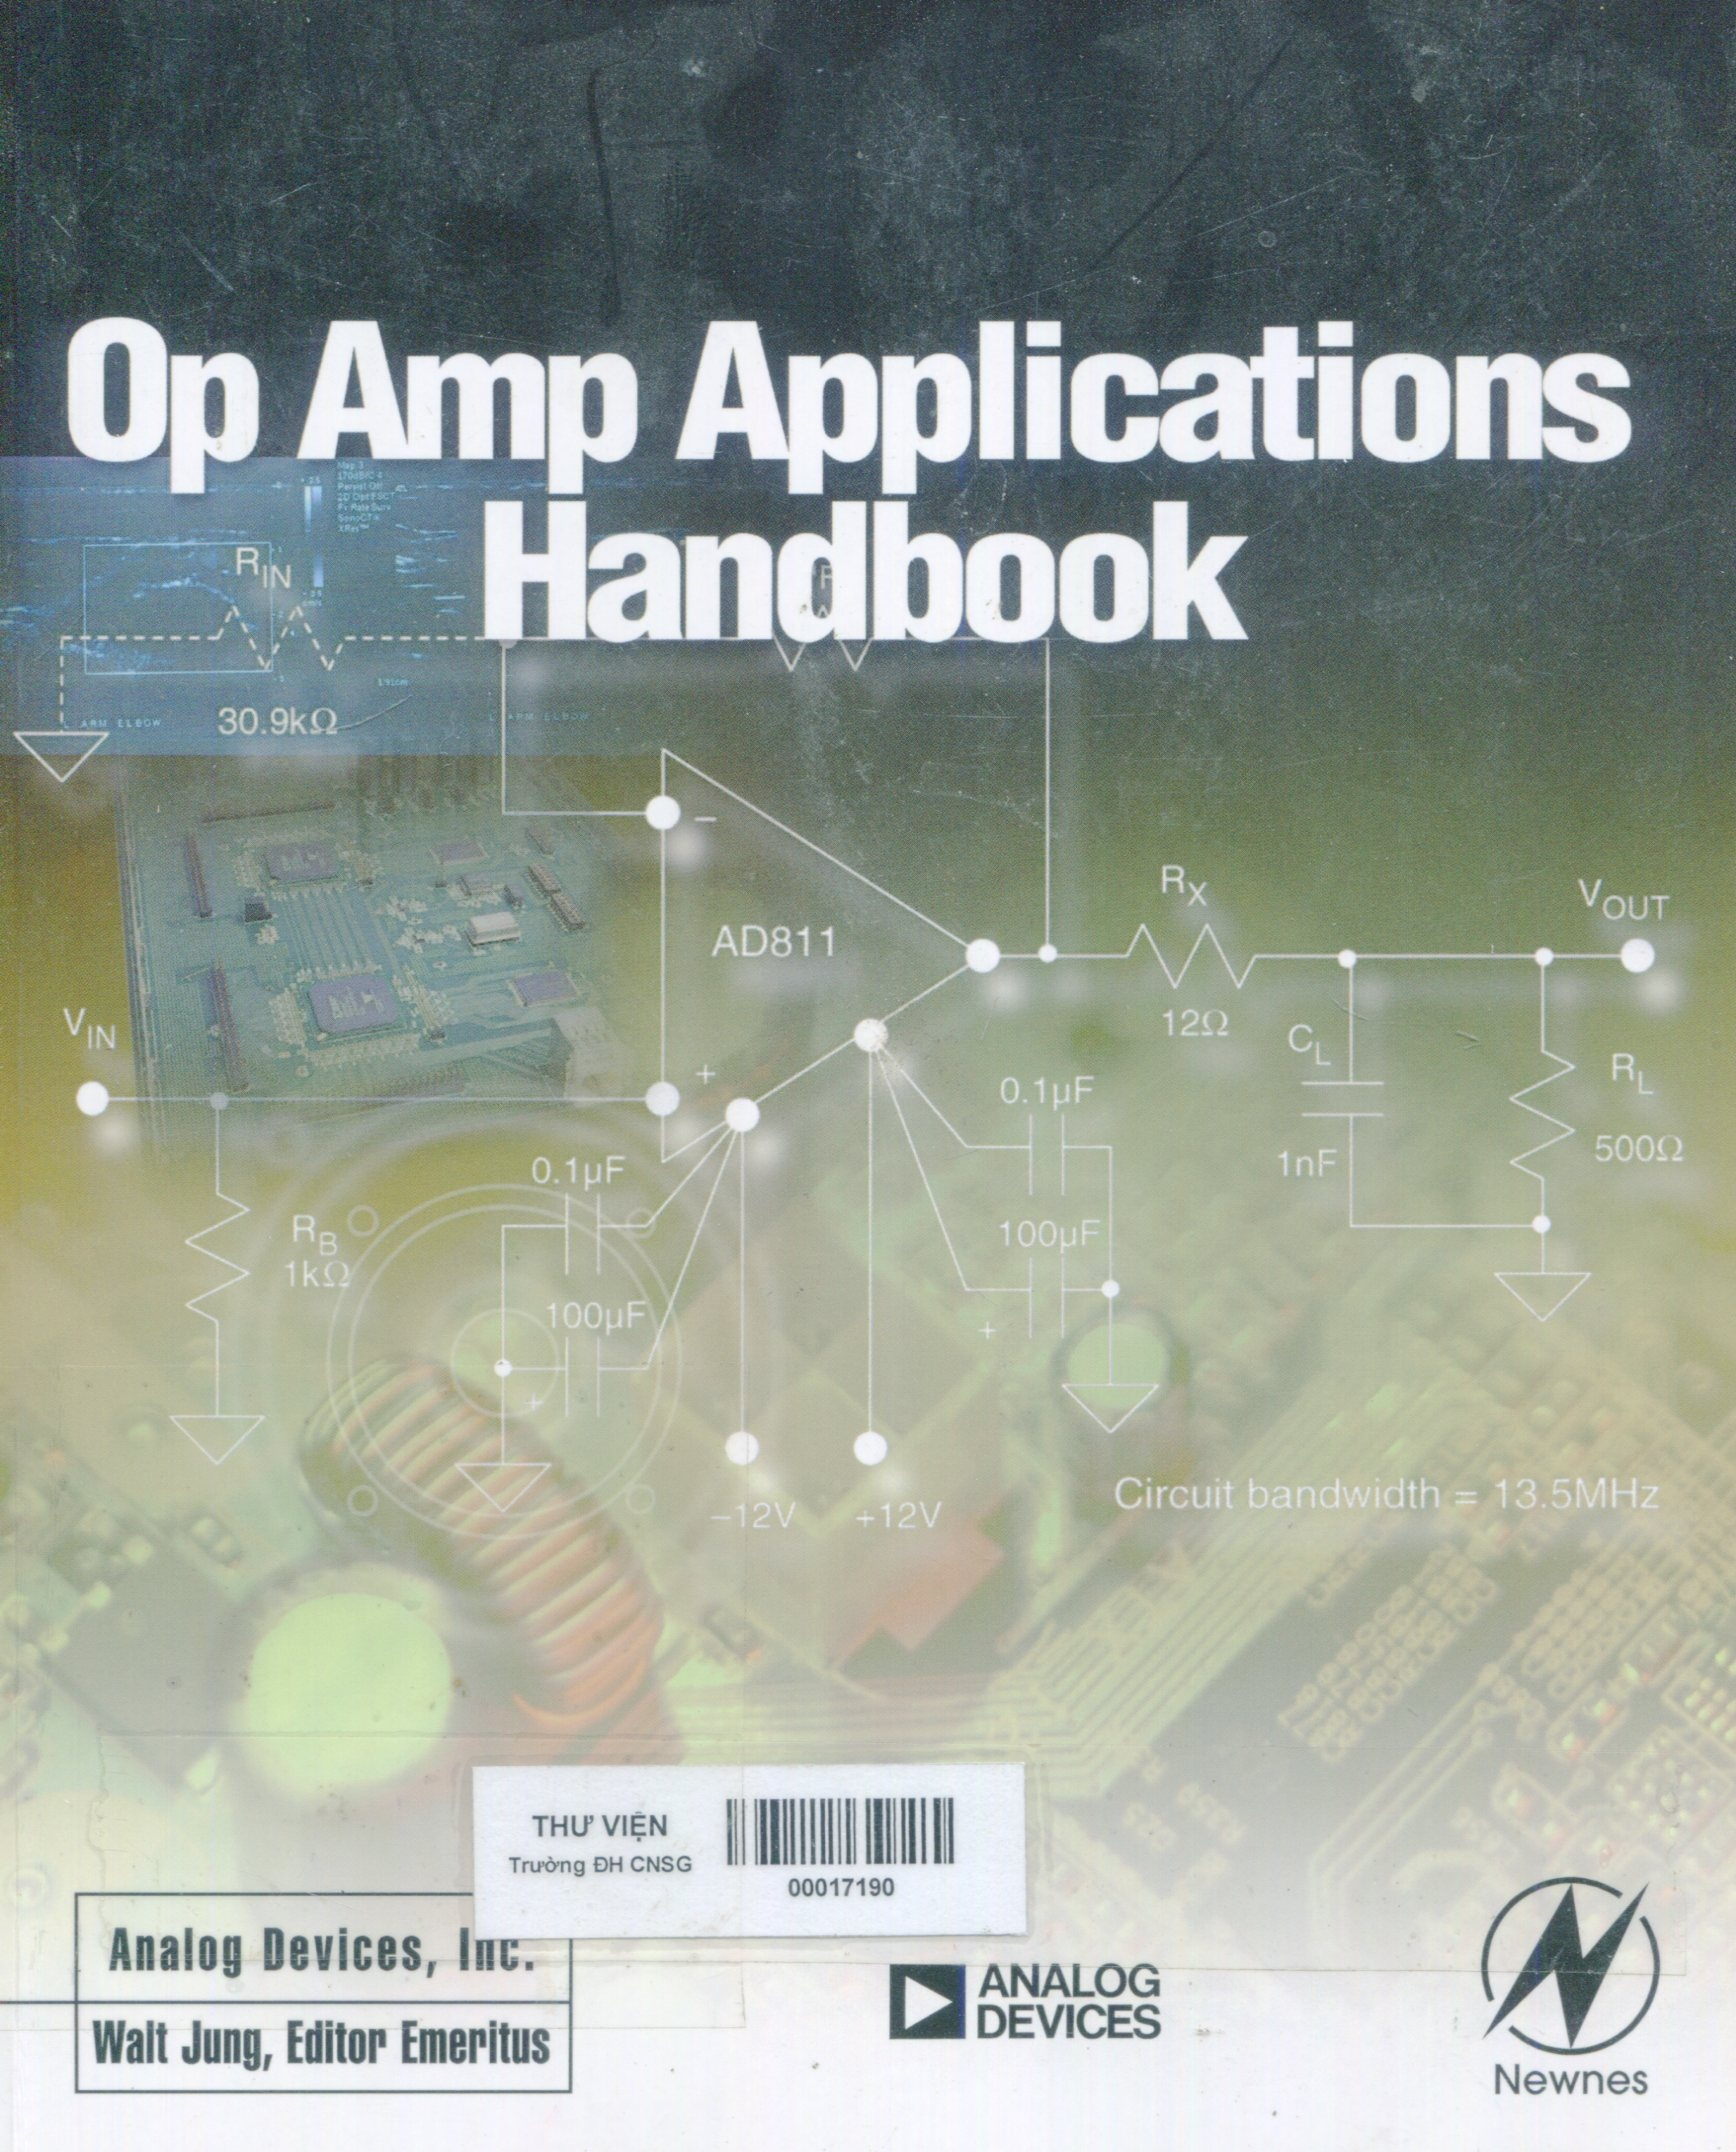 Op Amp applications handbook